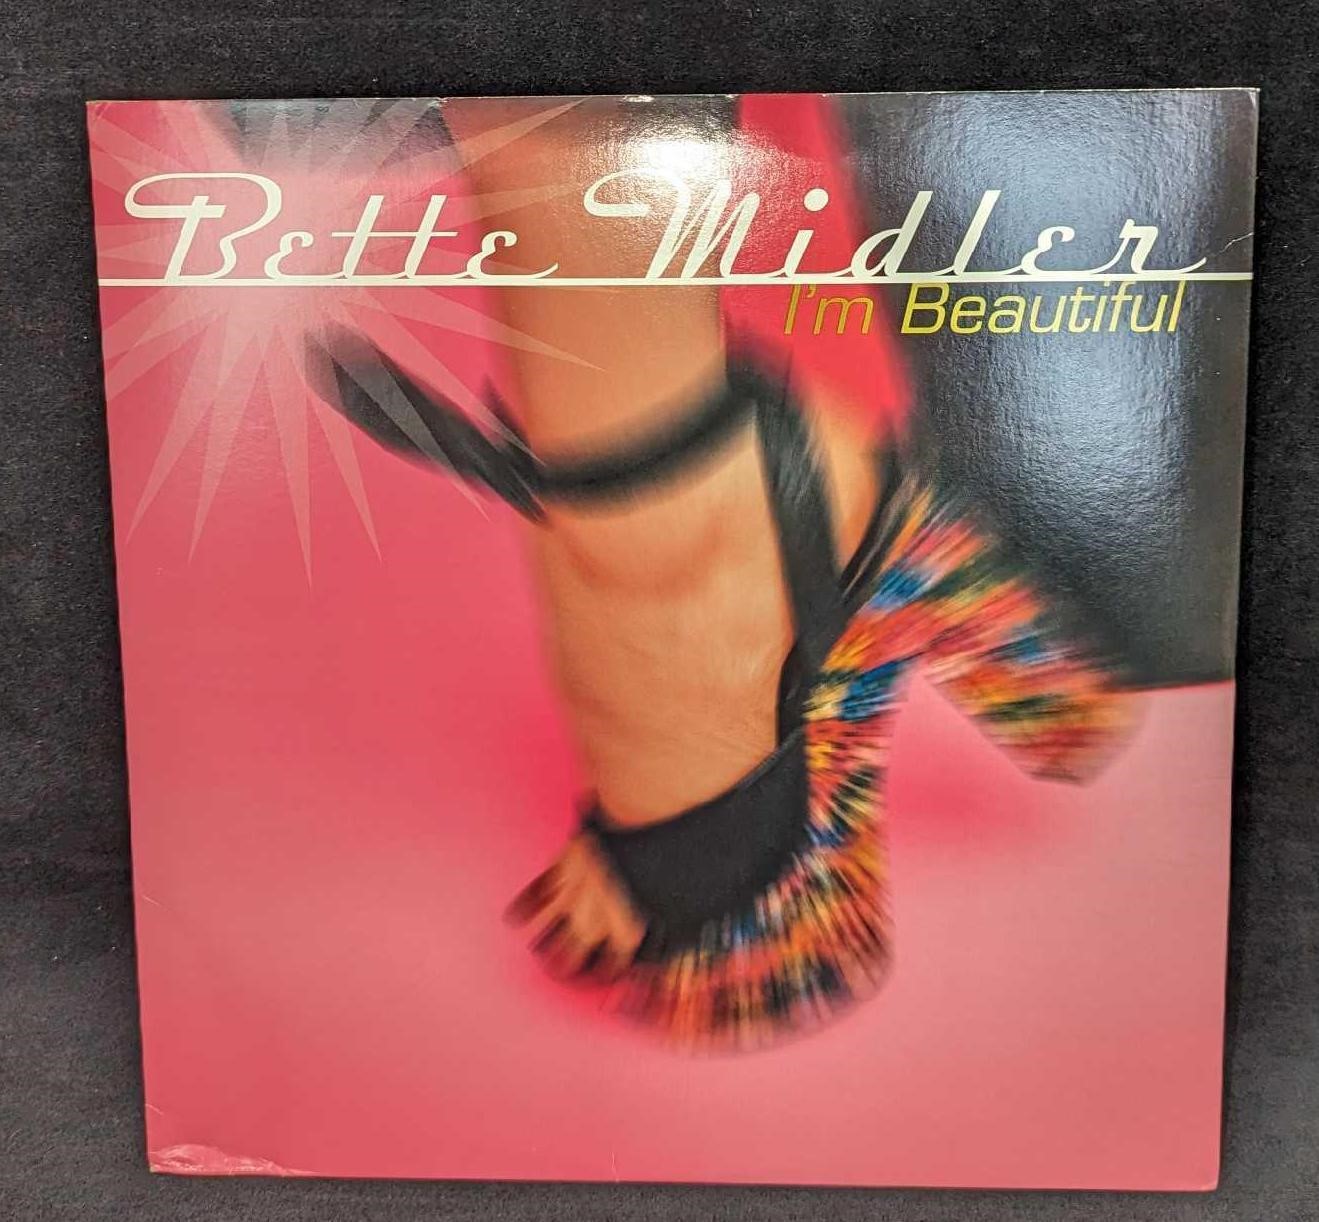 Bette Midler I'm Beautiful Maxi Single LP